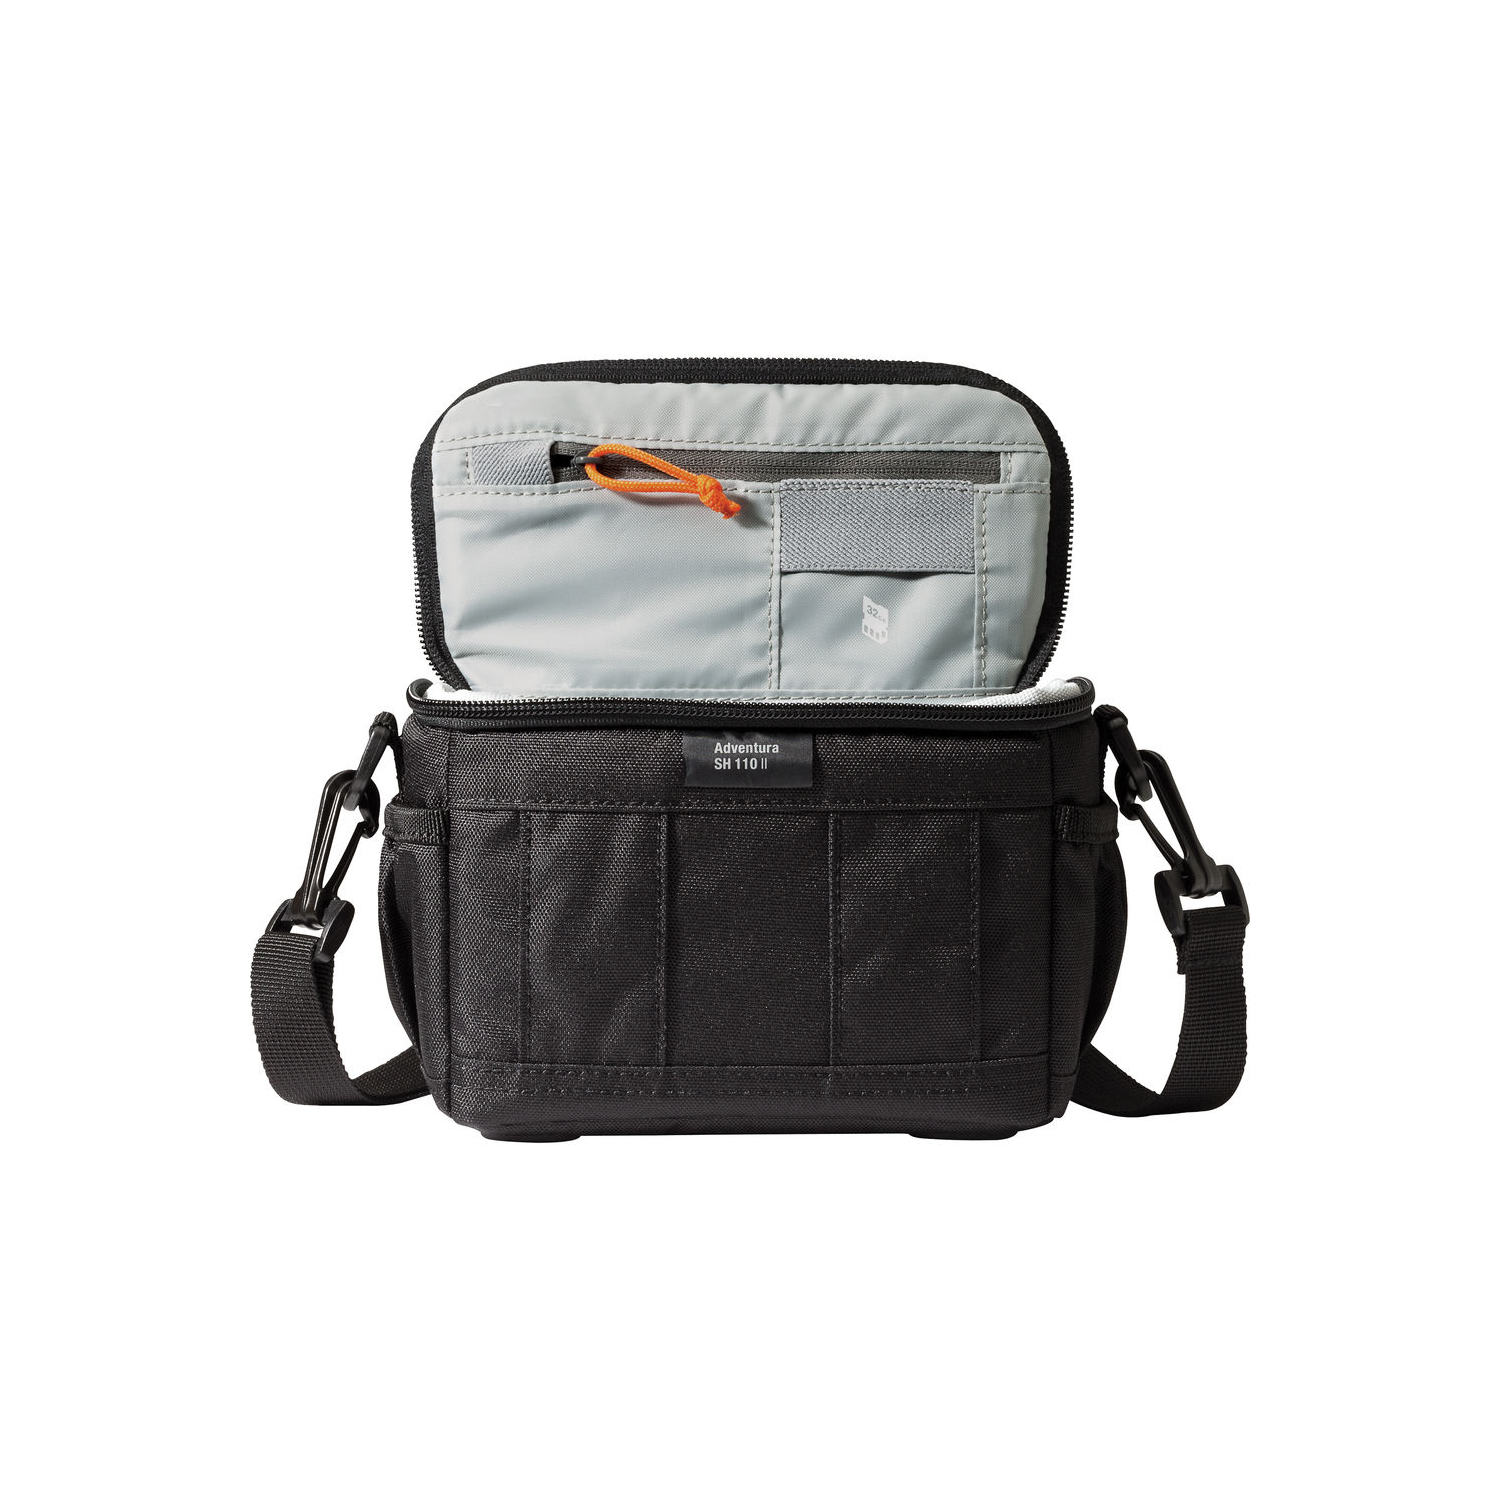 Lowepro Adventura Shoulder Bag SH 110 II